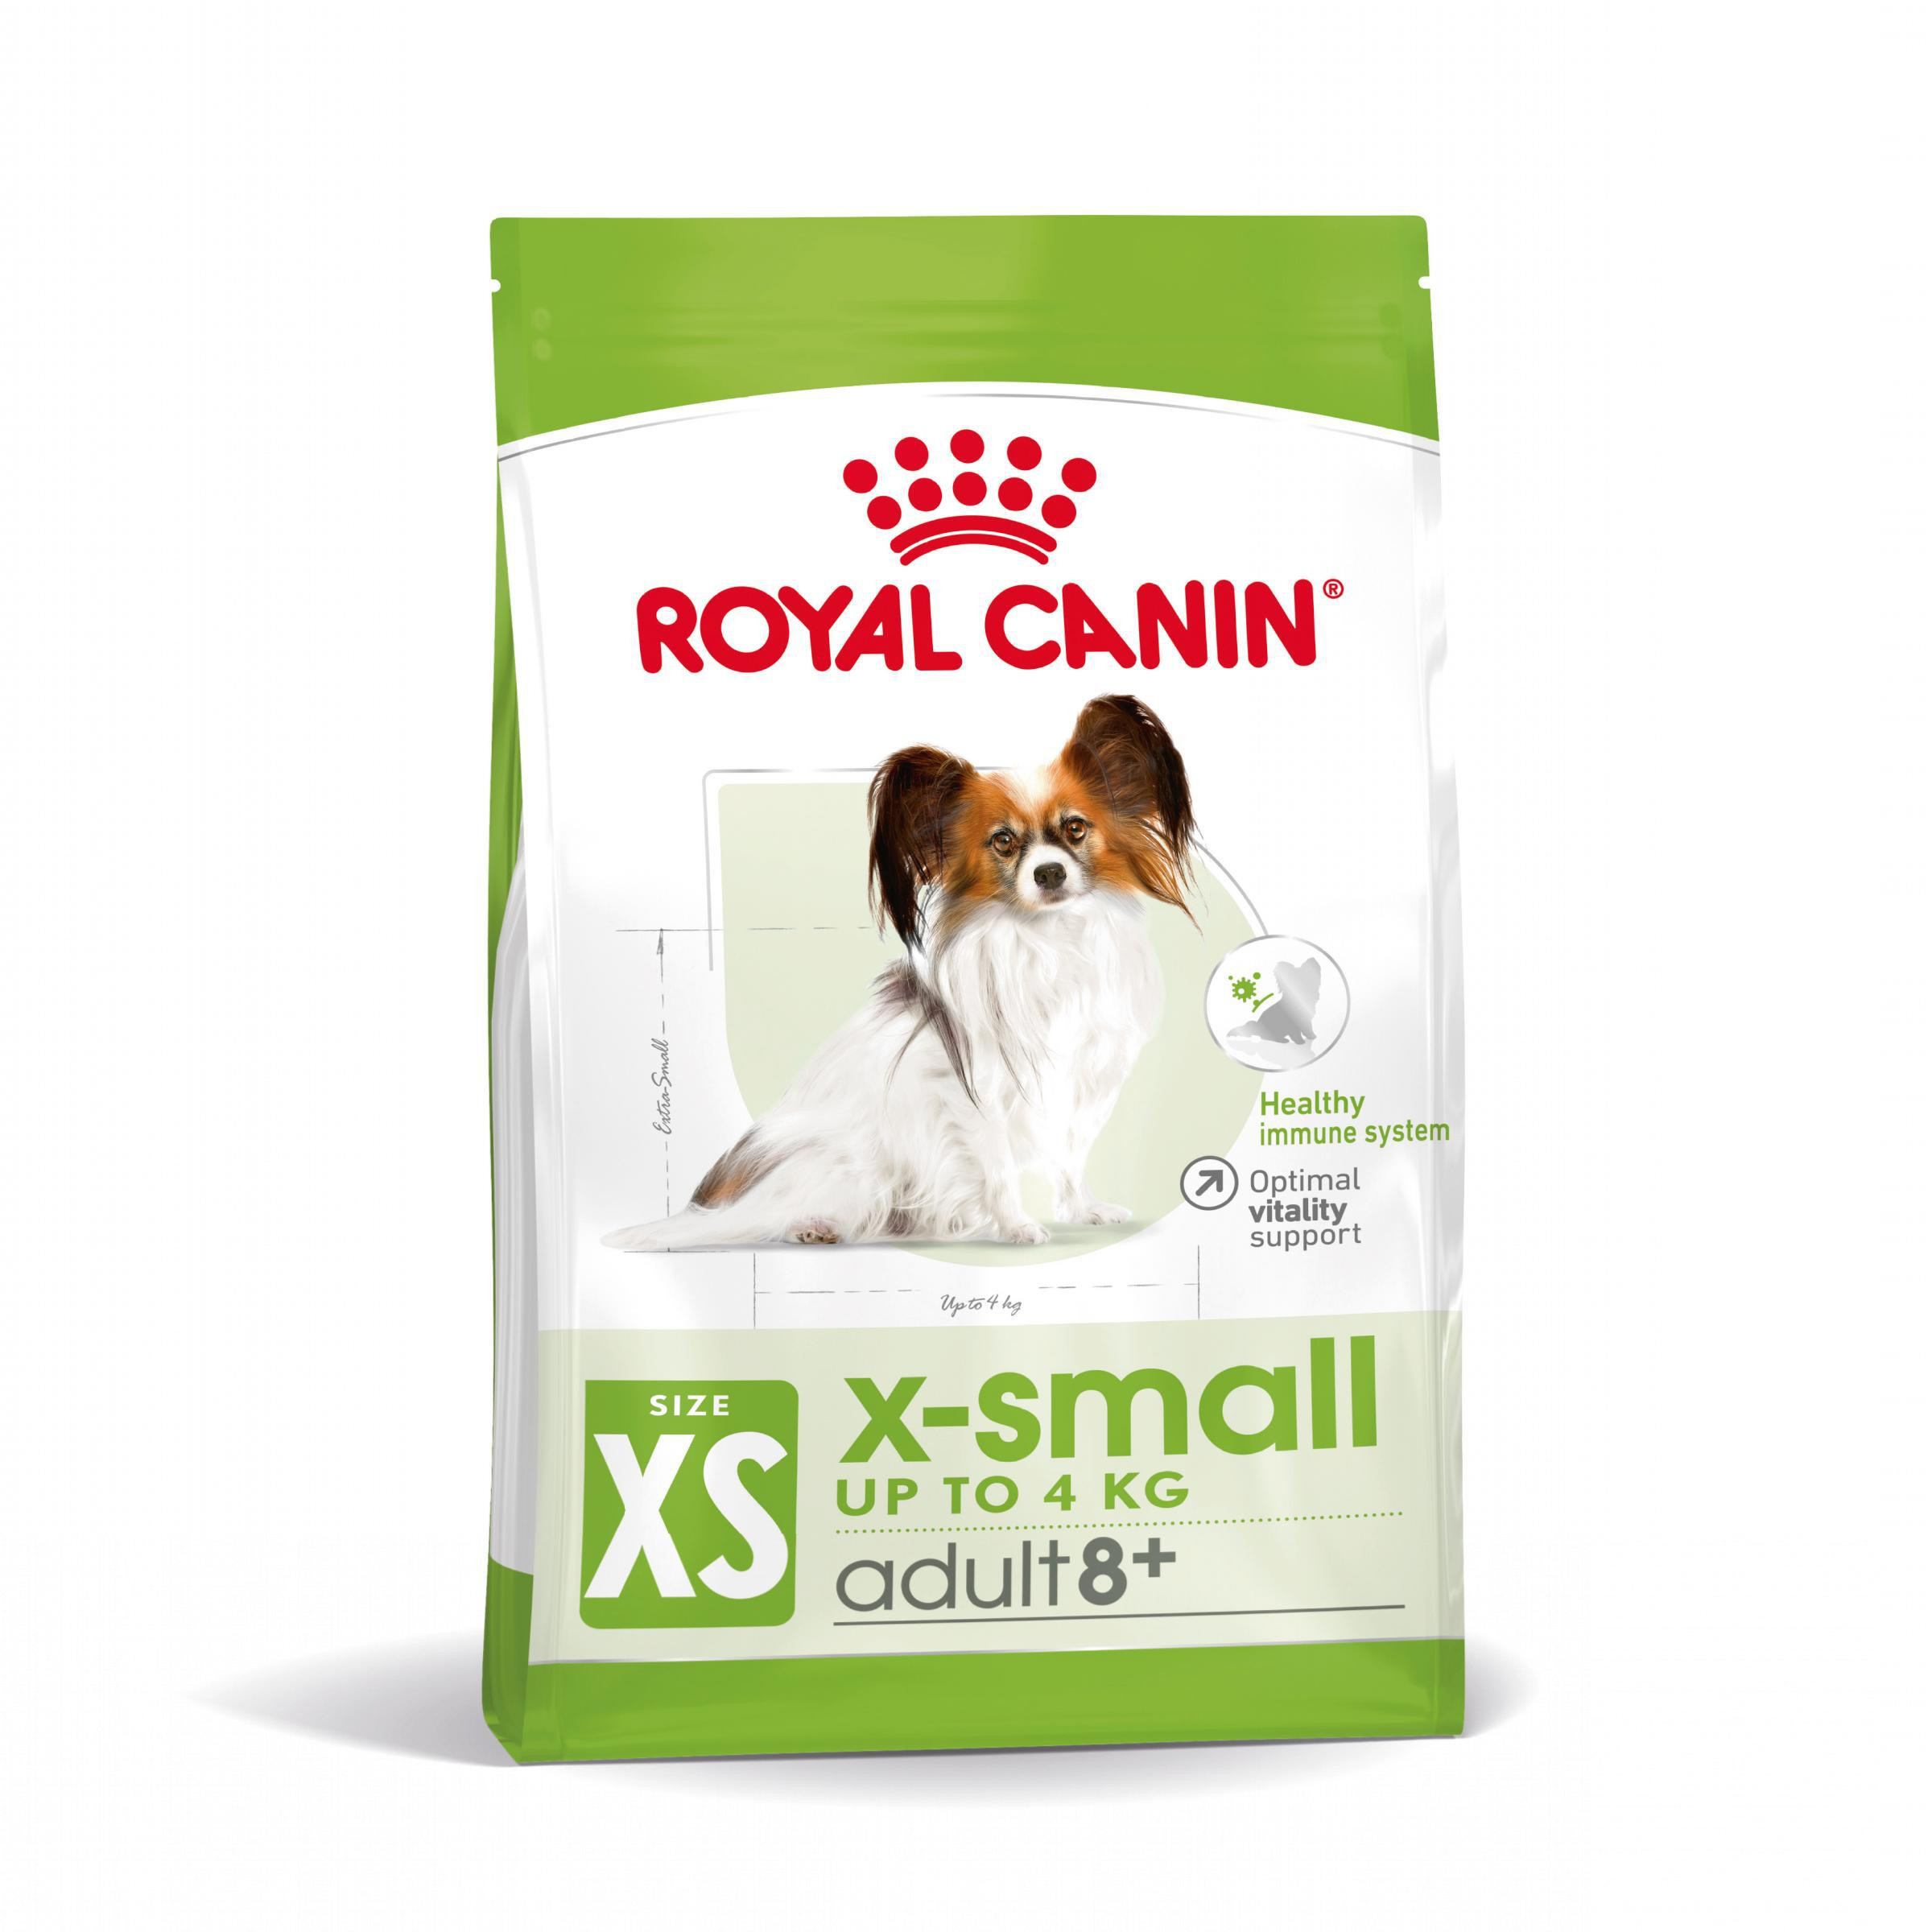 Royal Canin X-Small Adult 8+ hundefoder